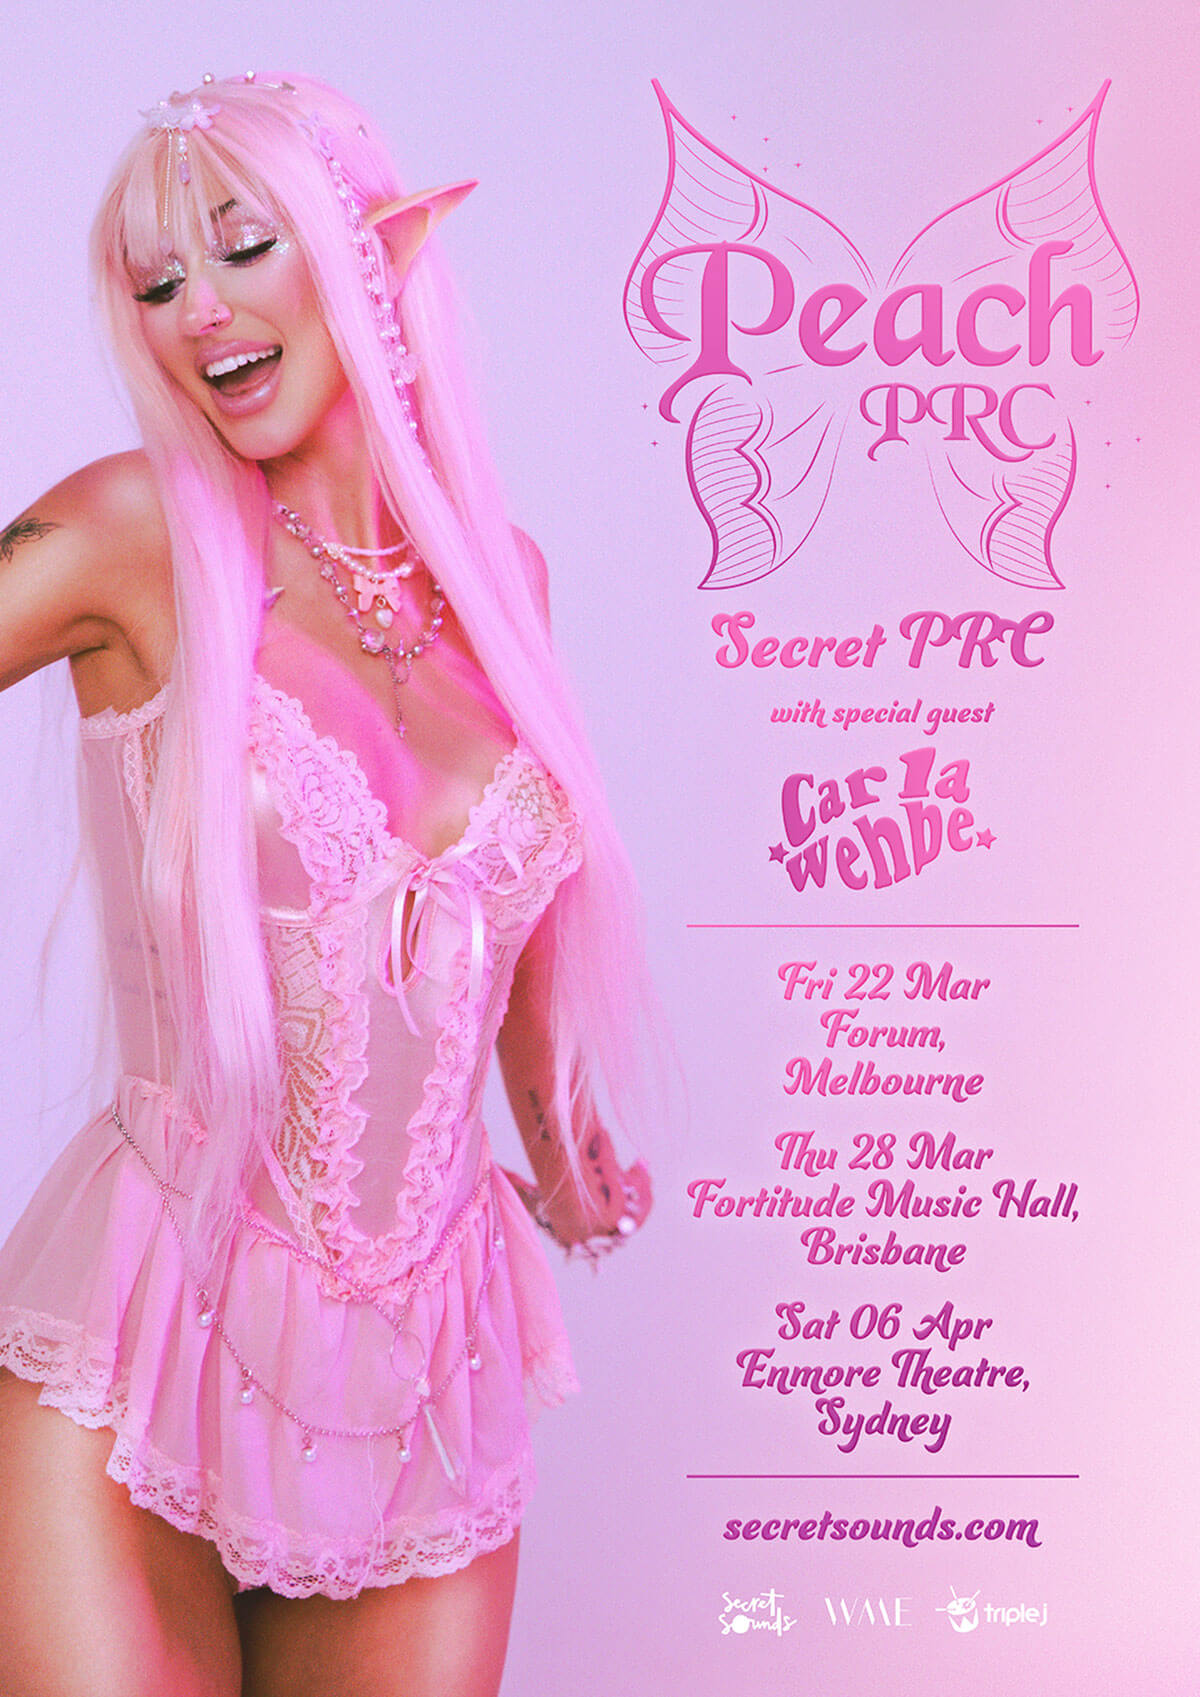 peach-prc-secret-prc-tour-poster-oz-edm